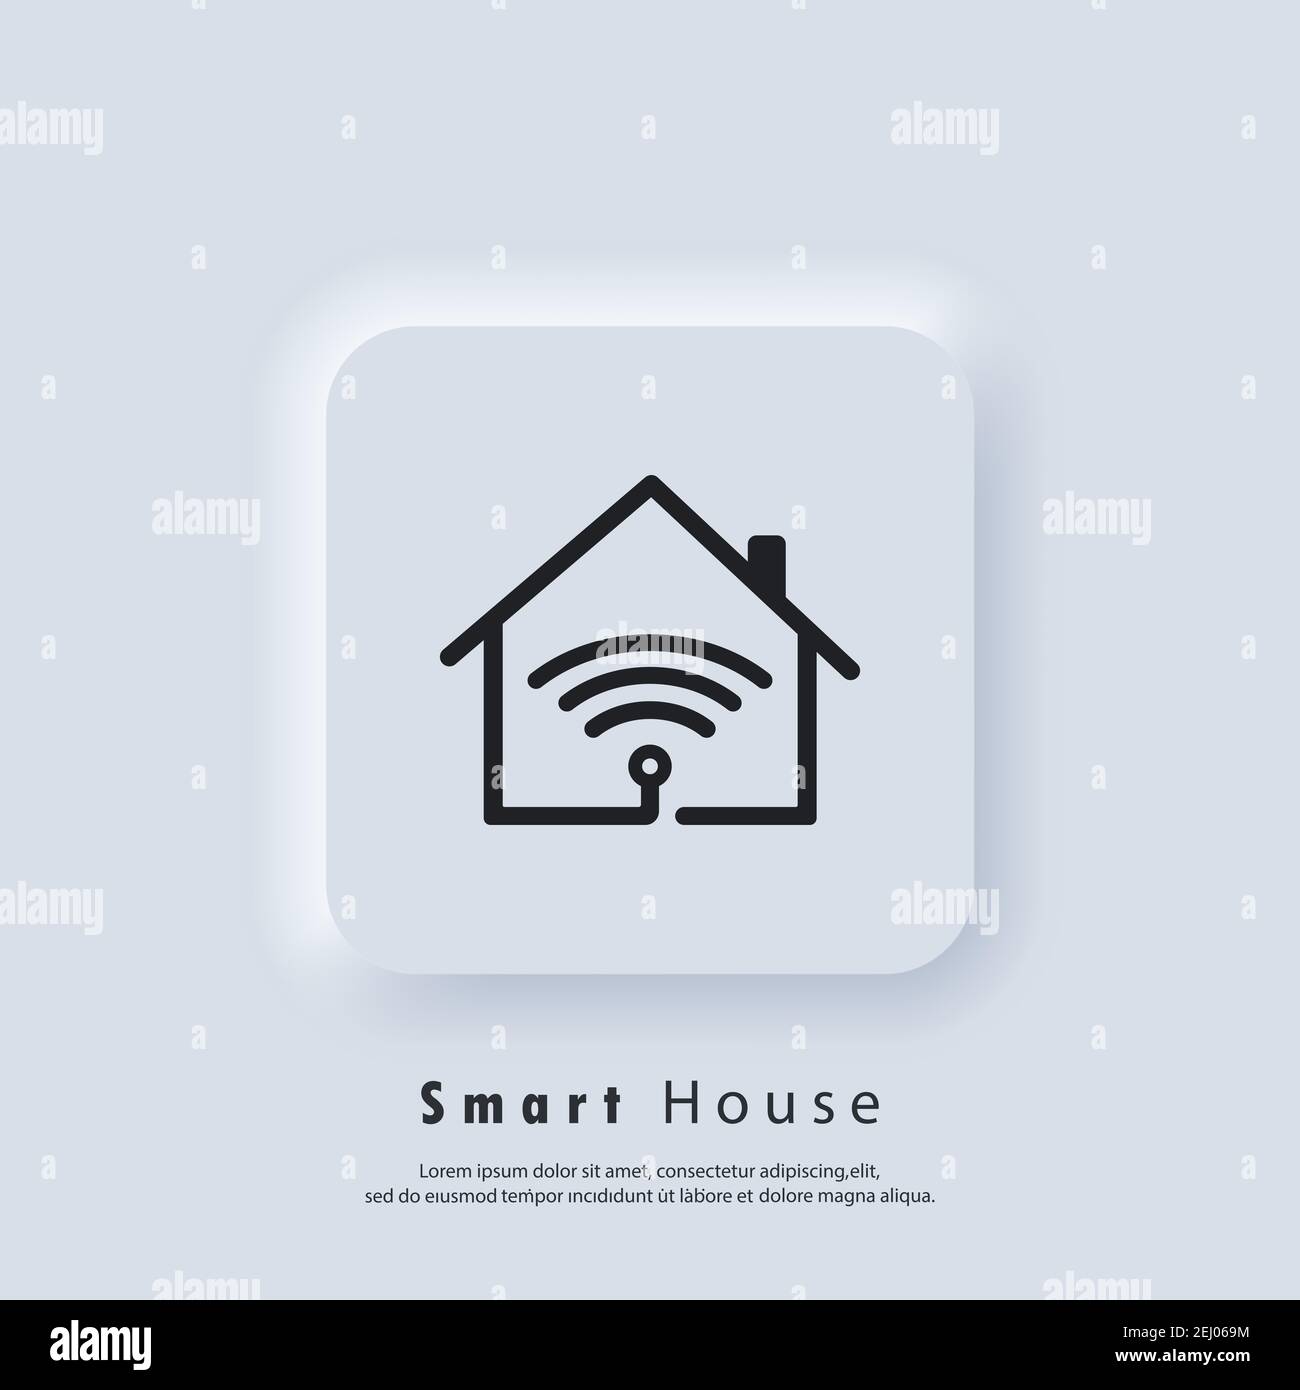 Infografía del hogar inteligente. Vector ilustración concepto de hogar con  control centralizado Imagen Vector de stock - Alamy